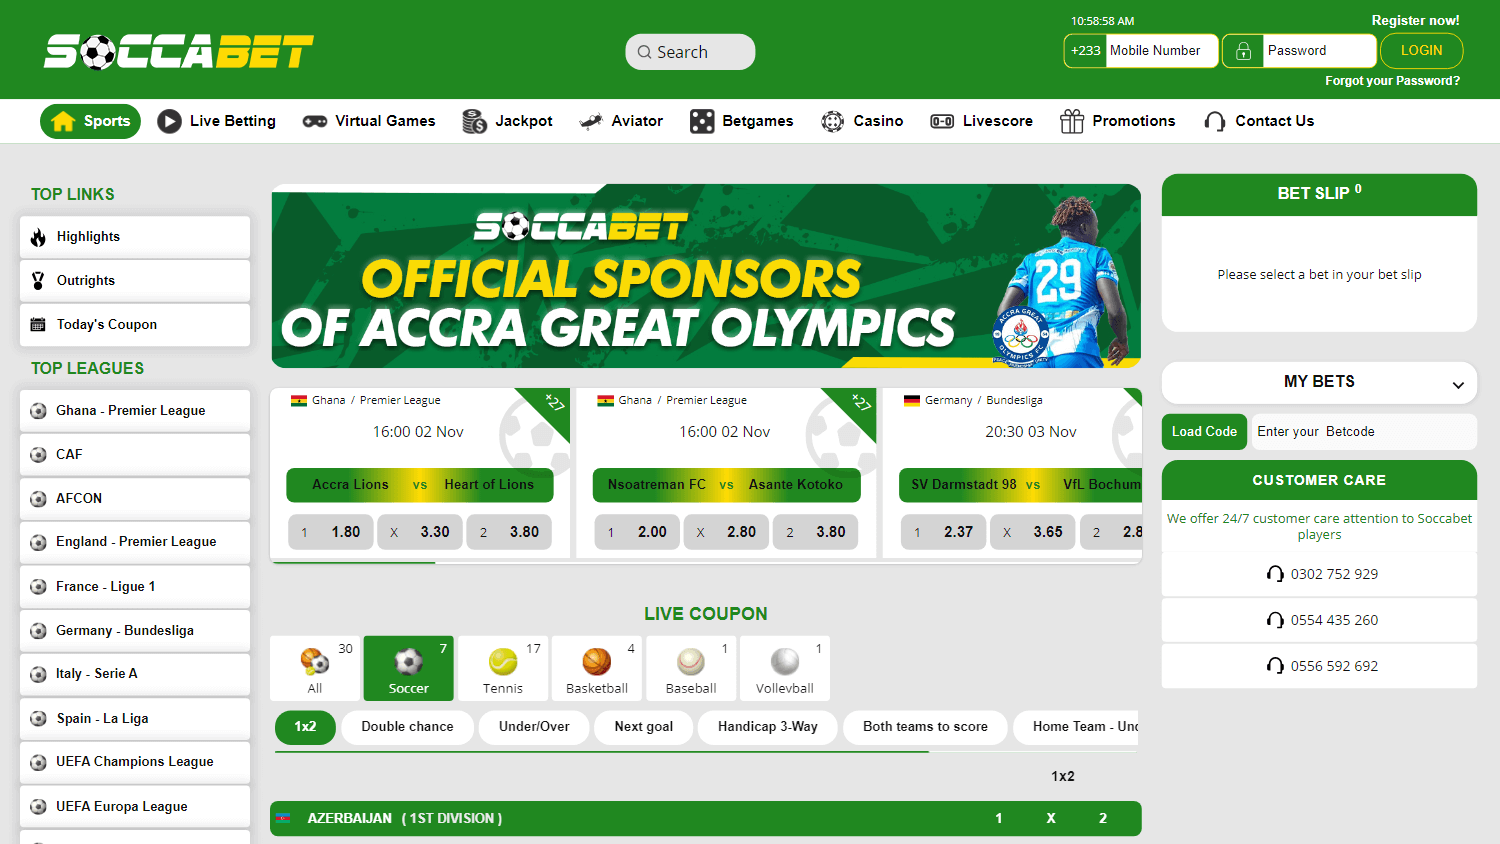 soccabet_casino_homepage_desktop